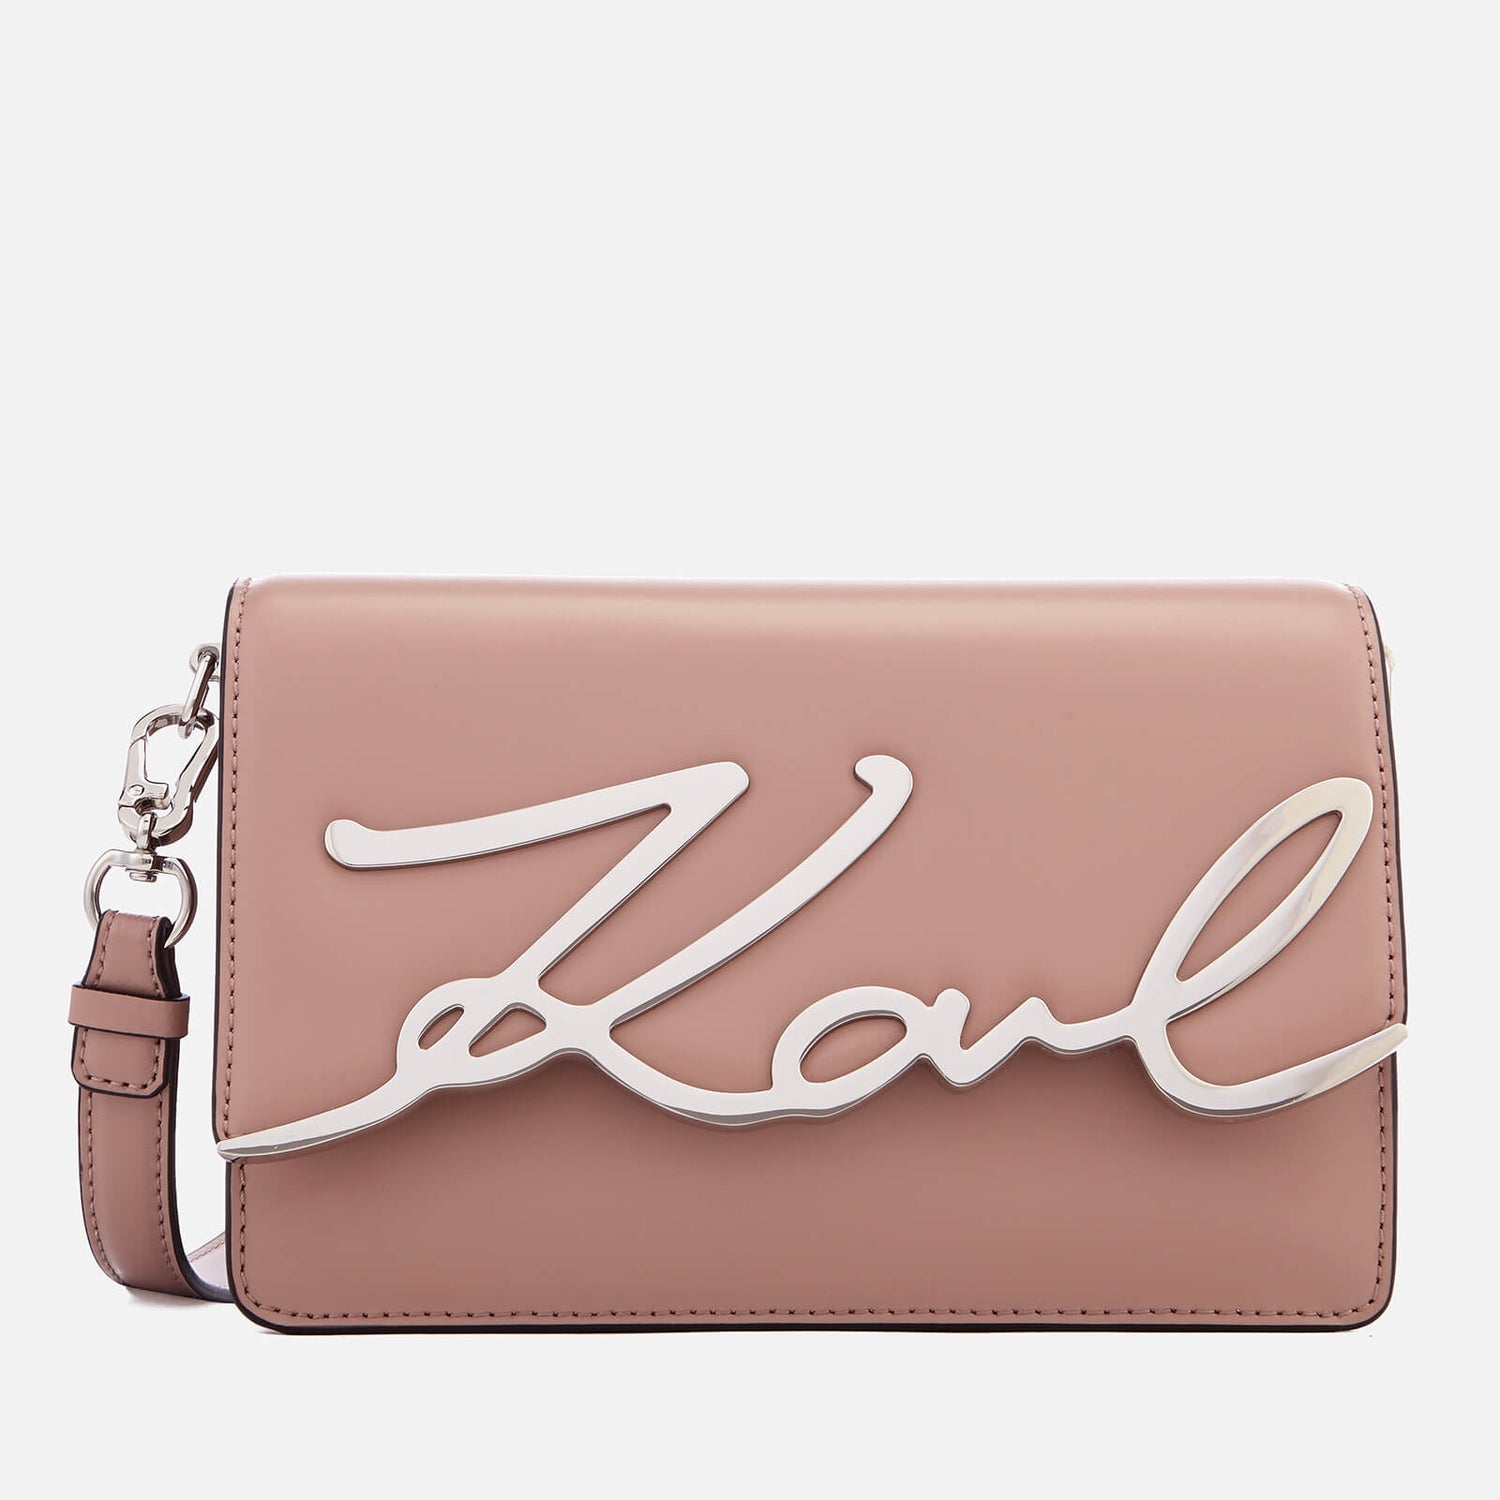 Karl Lagerfeld Women's Signature Big Shoulder Bag - Black Womens  Accessories, TheHut.com